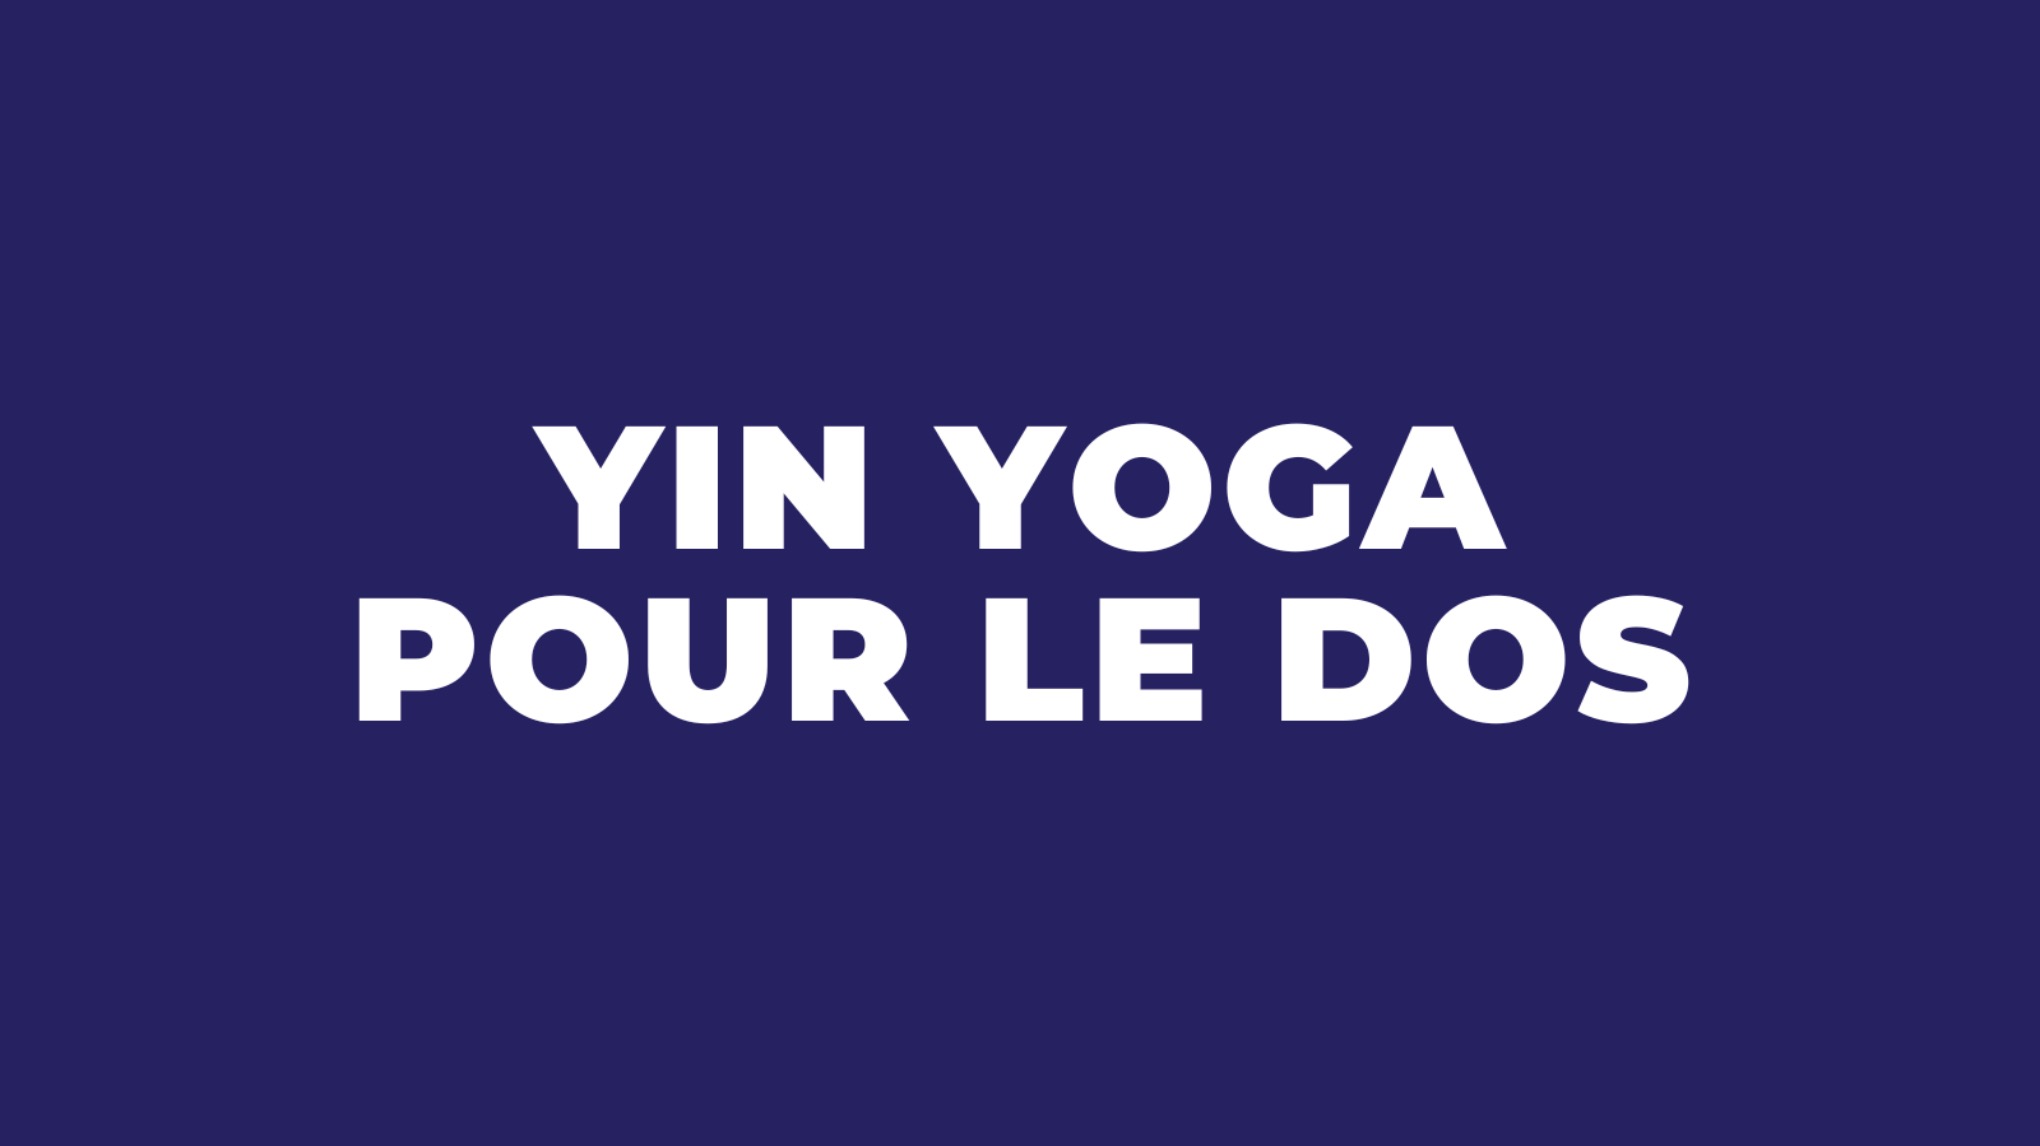 Yin yoga pour le dos